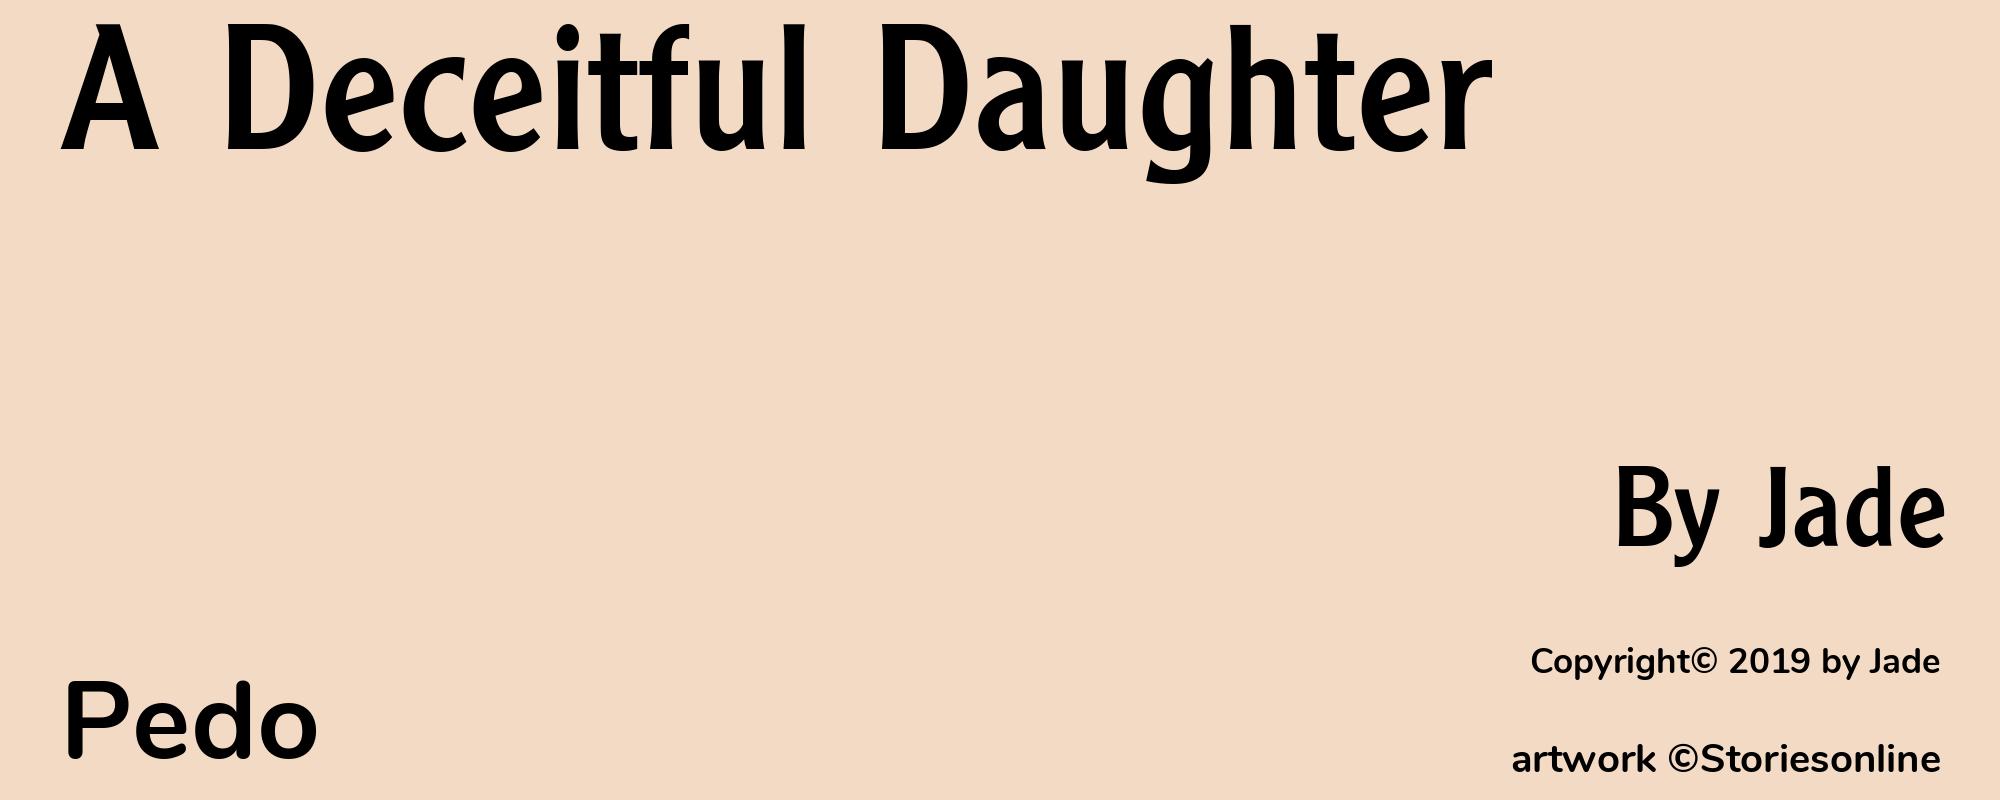 A Deceitful Daughter - Cover